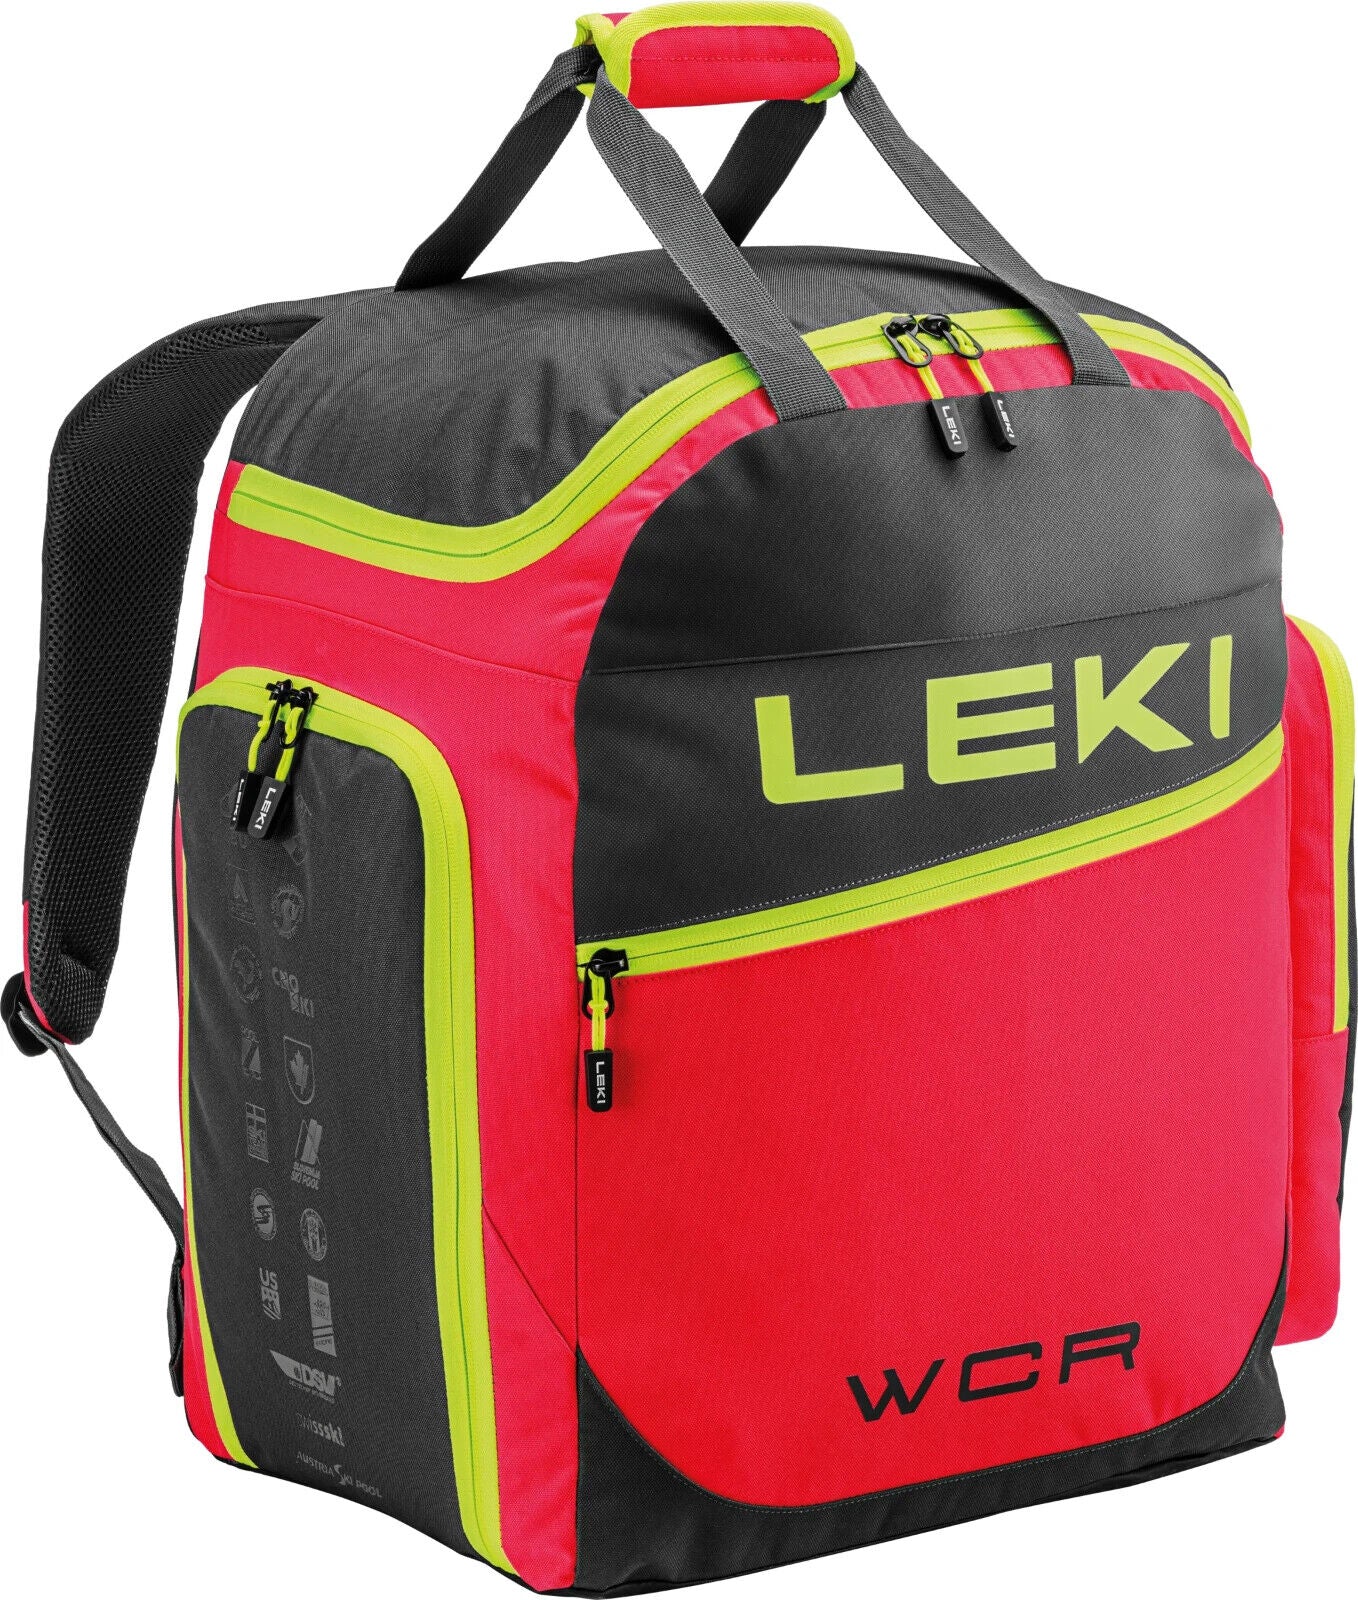 Leki Skiboot Bag WCR / 60l - Skistiefeltasche - Ski Boot Bag - Skischuhtasche